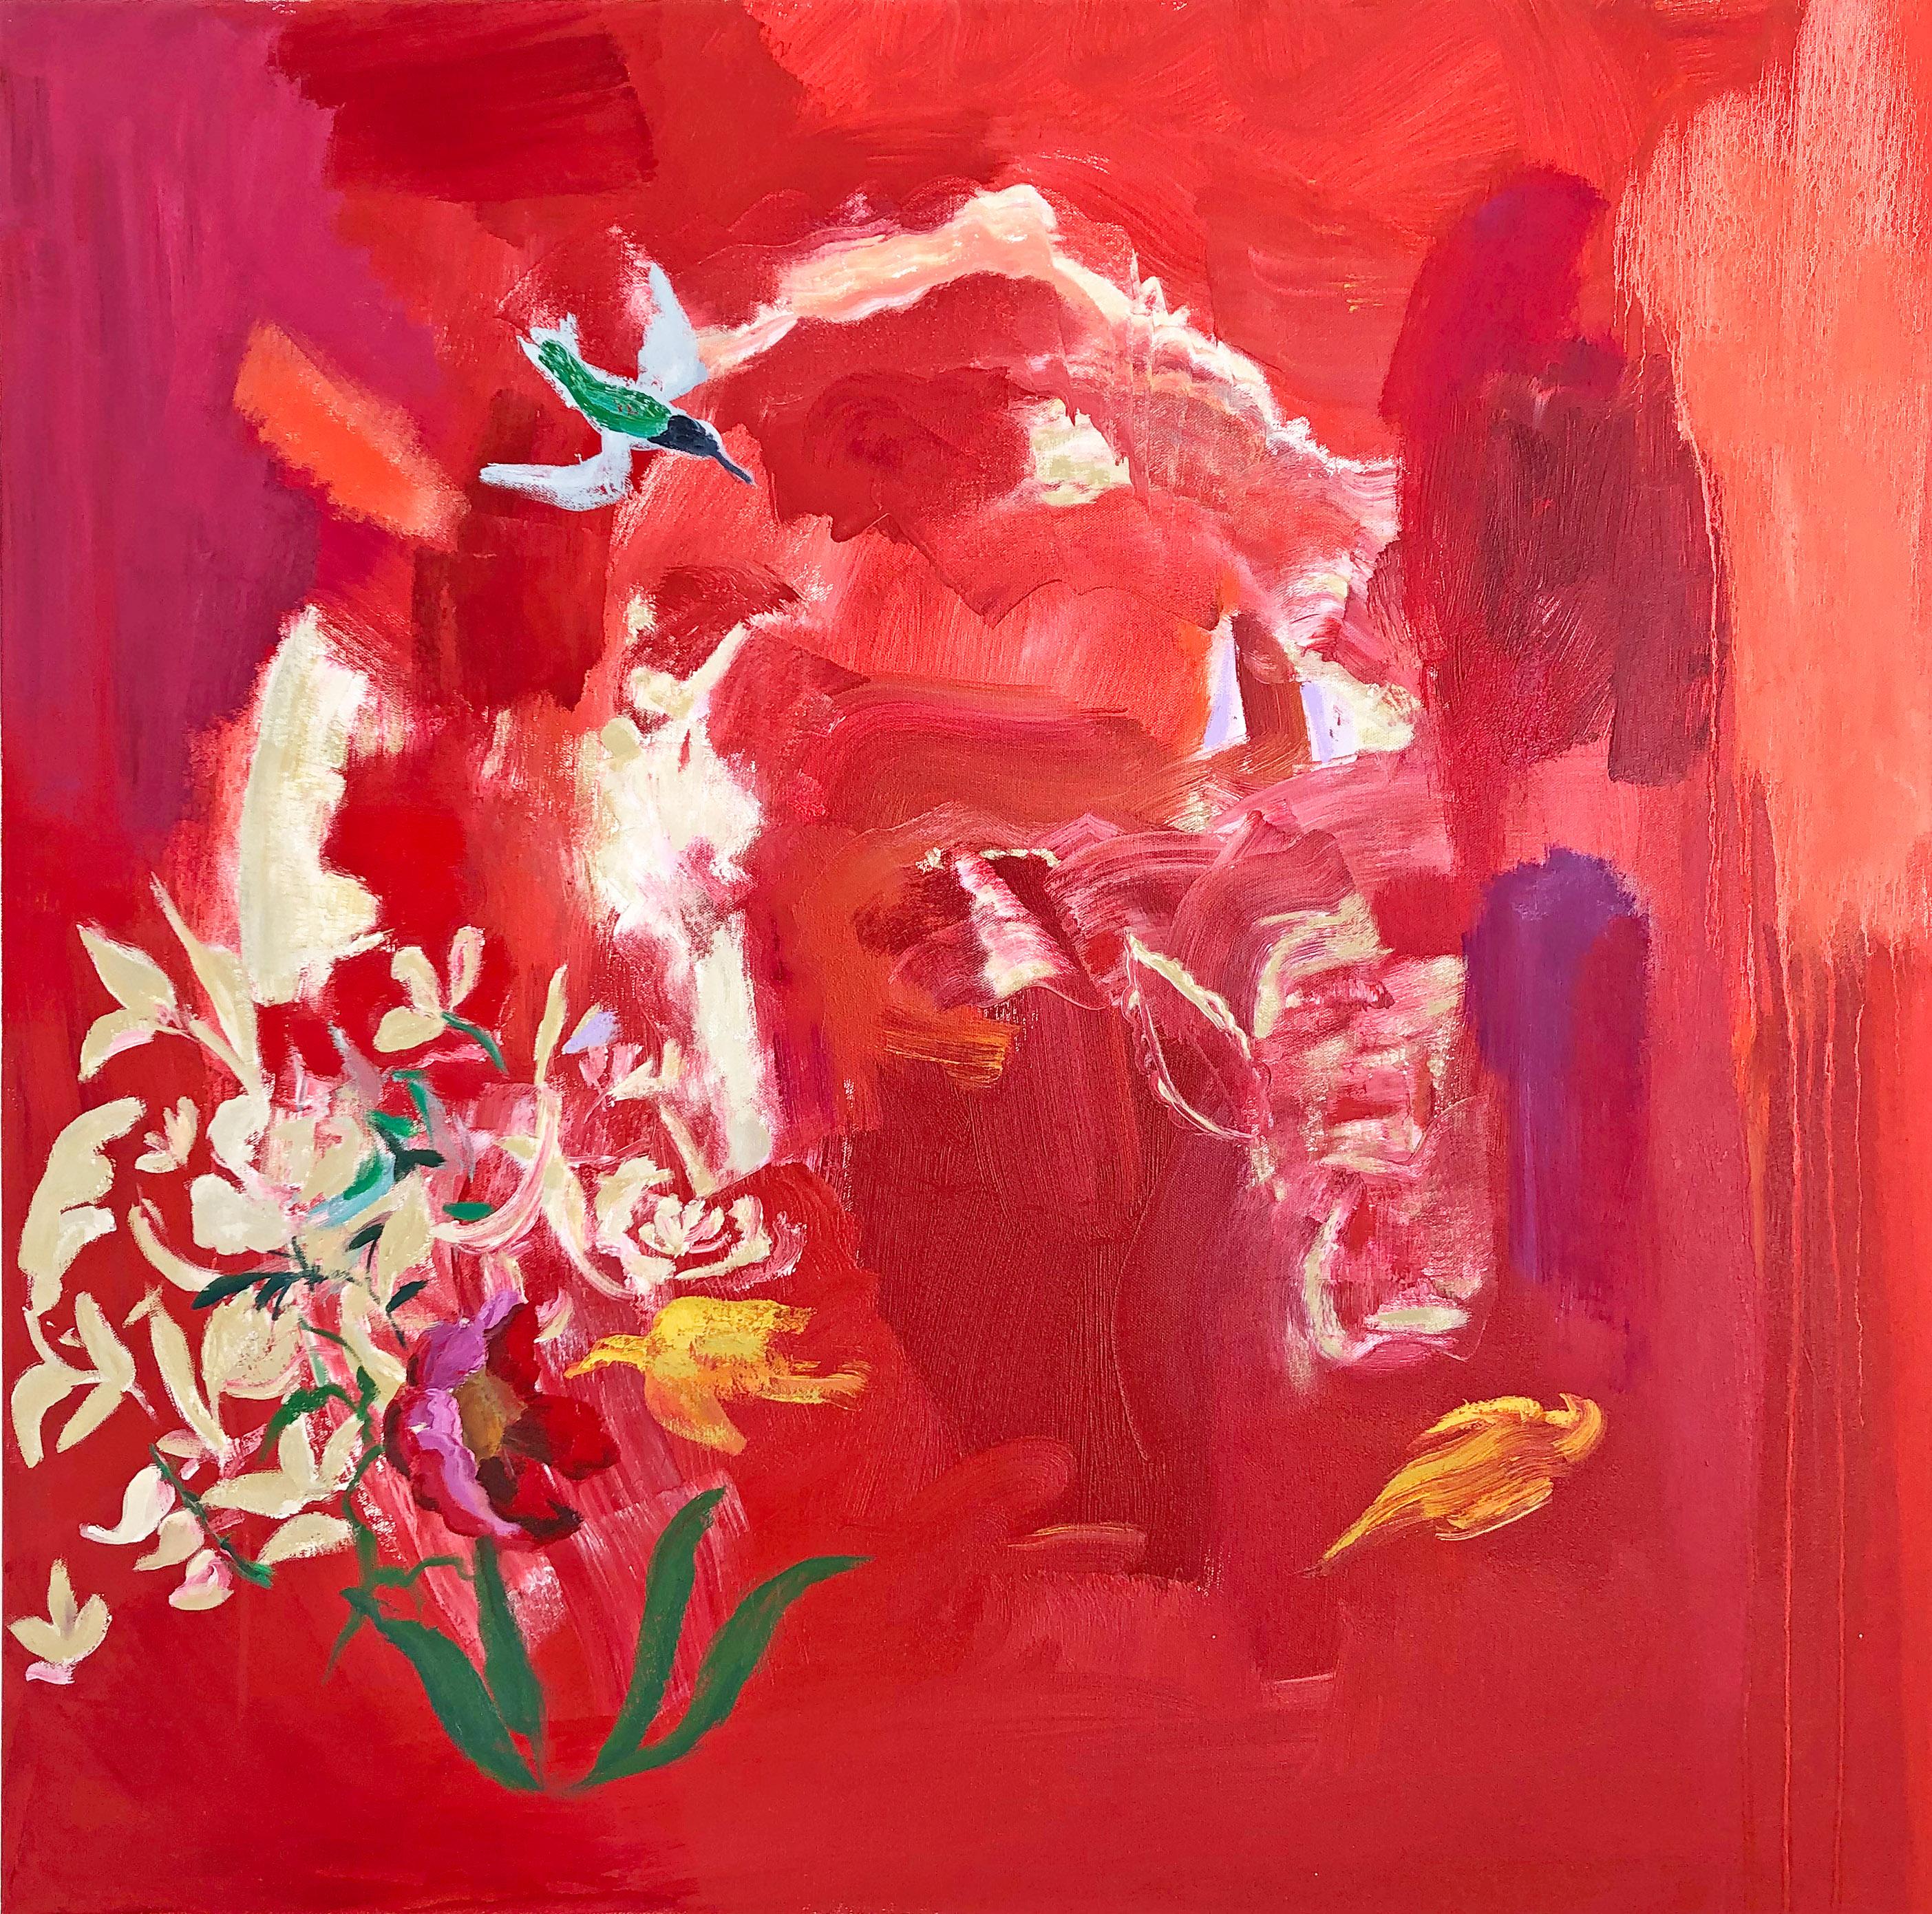 Abstract Painting Melanie Parke - Peinture botanique abstraite oiseau coquelicot, rouge orange, vert jaune, violet